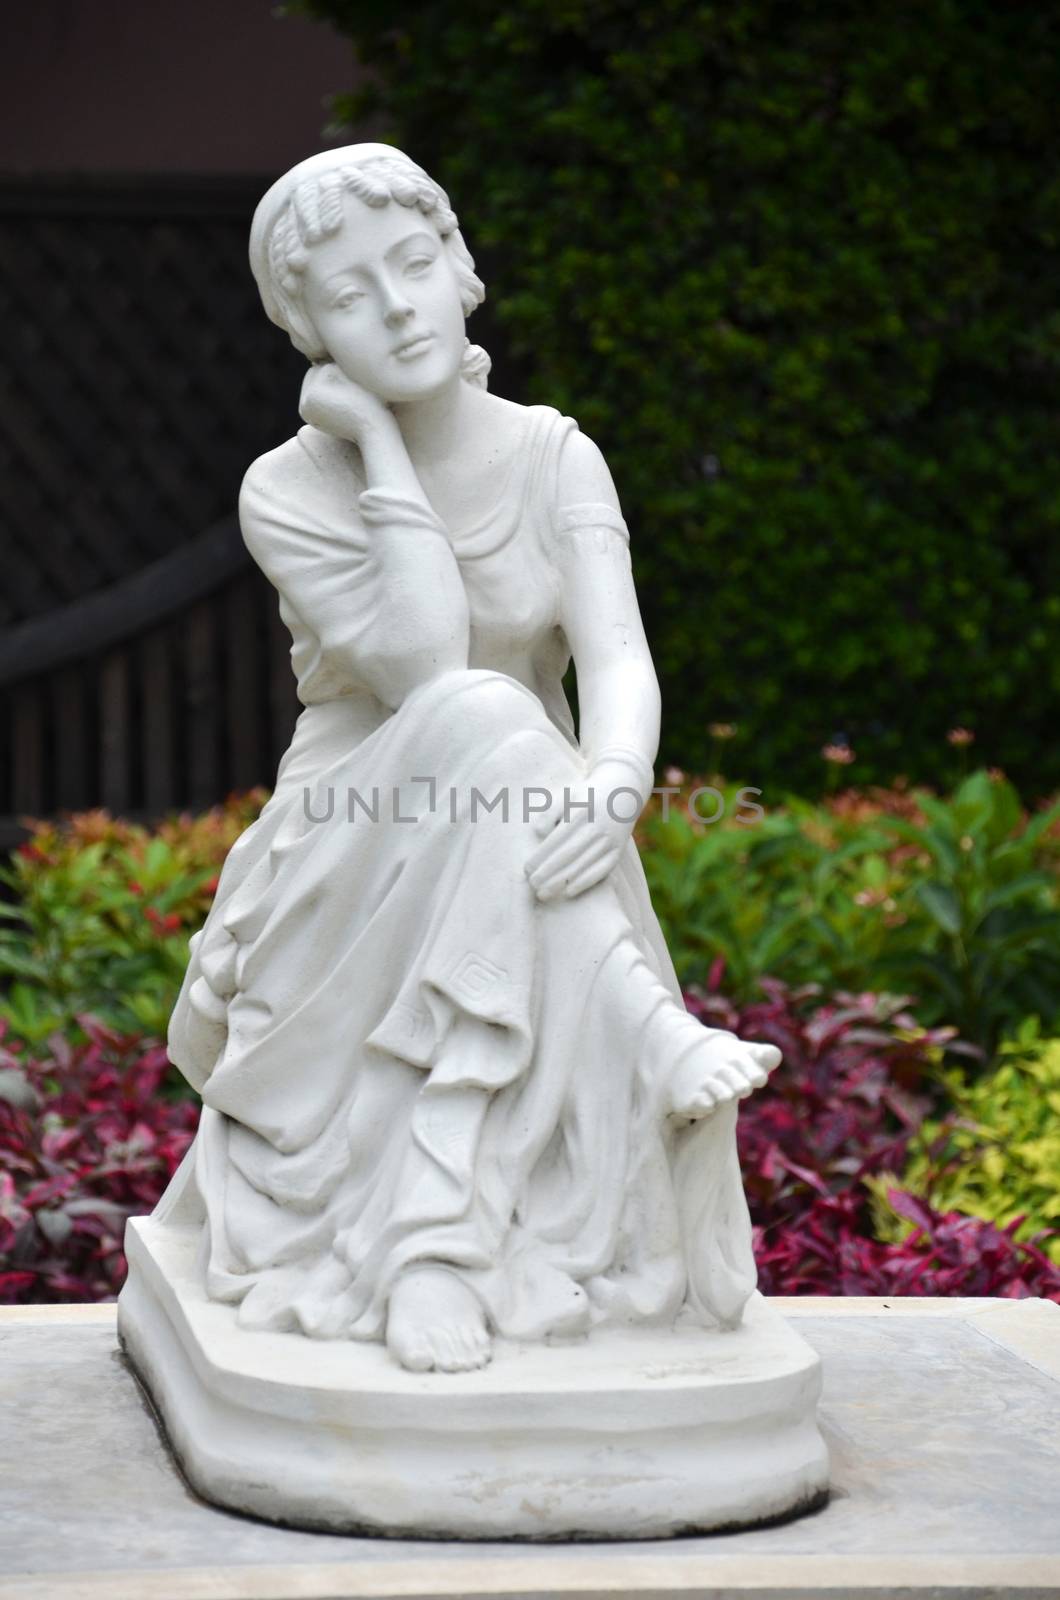 Angel sculpture in the park, Bangkok, Thailand